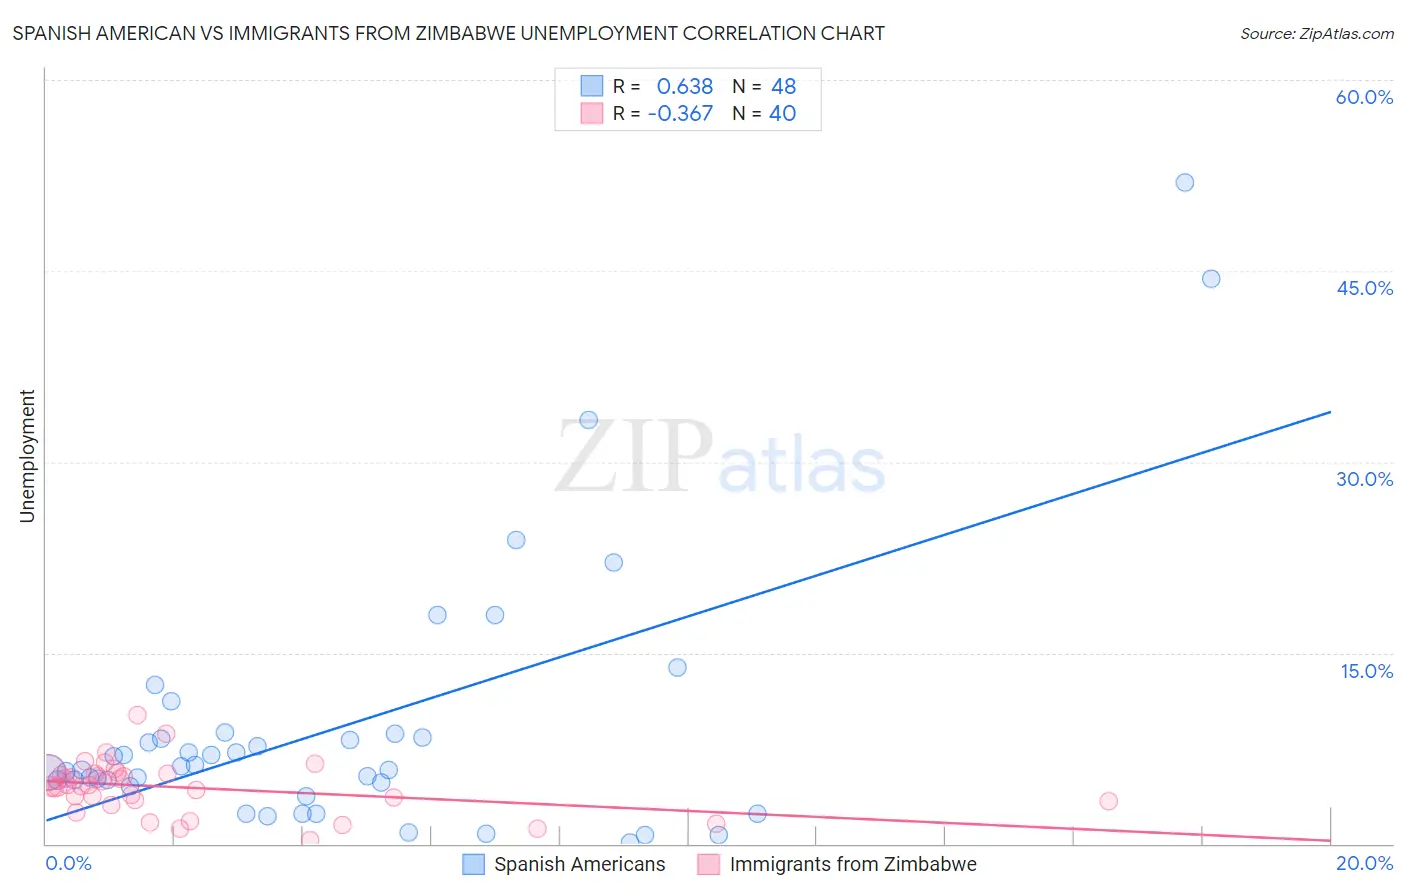 Spanish American vs Immigrants from Zimbabwe Unemployment